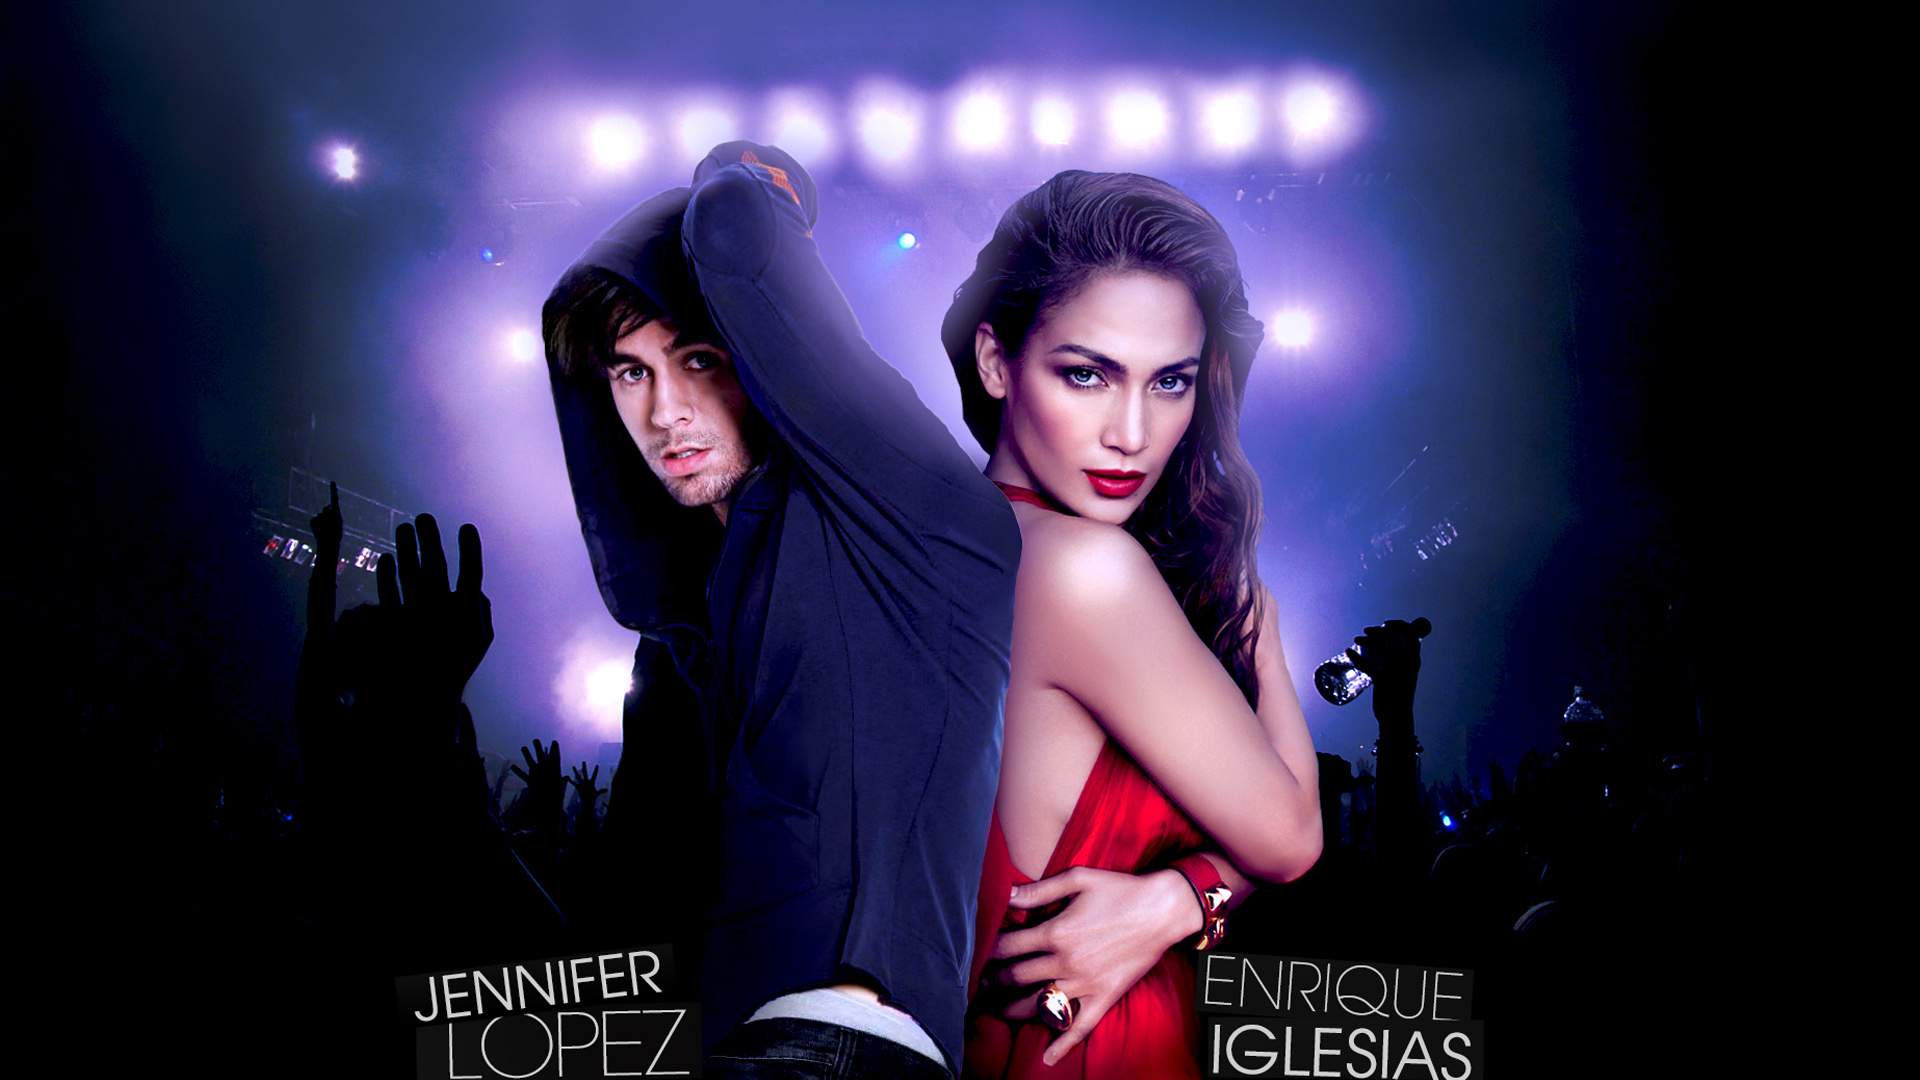 Jennifer Lopez Enrique Iglesias Tour1091018380 - Jennifer Lopez Enrique Iglesias Tour - Tour, Strawberry, Lopez, Jennifer, Iglesias, Enrique